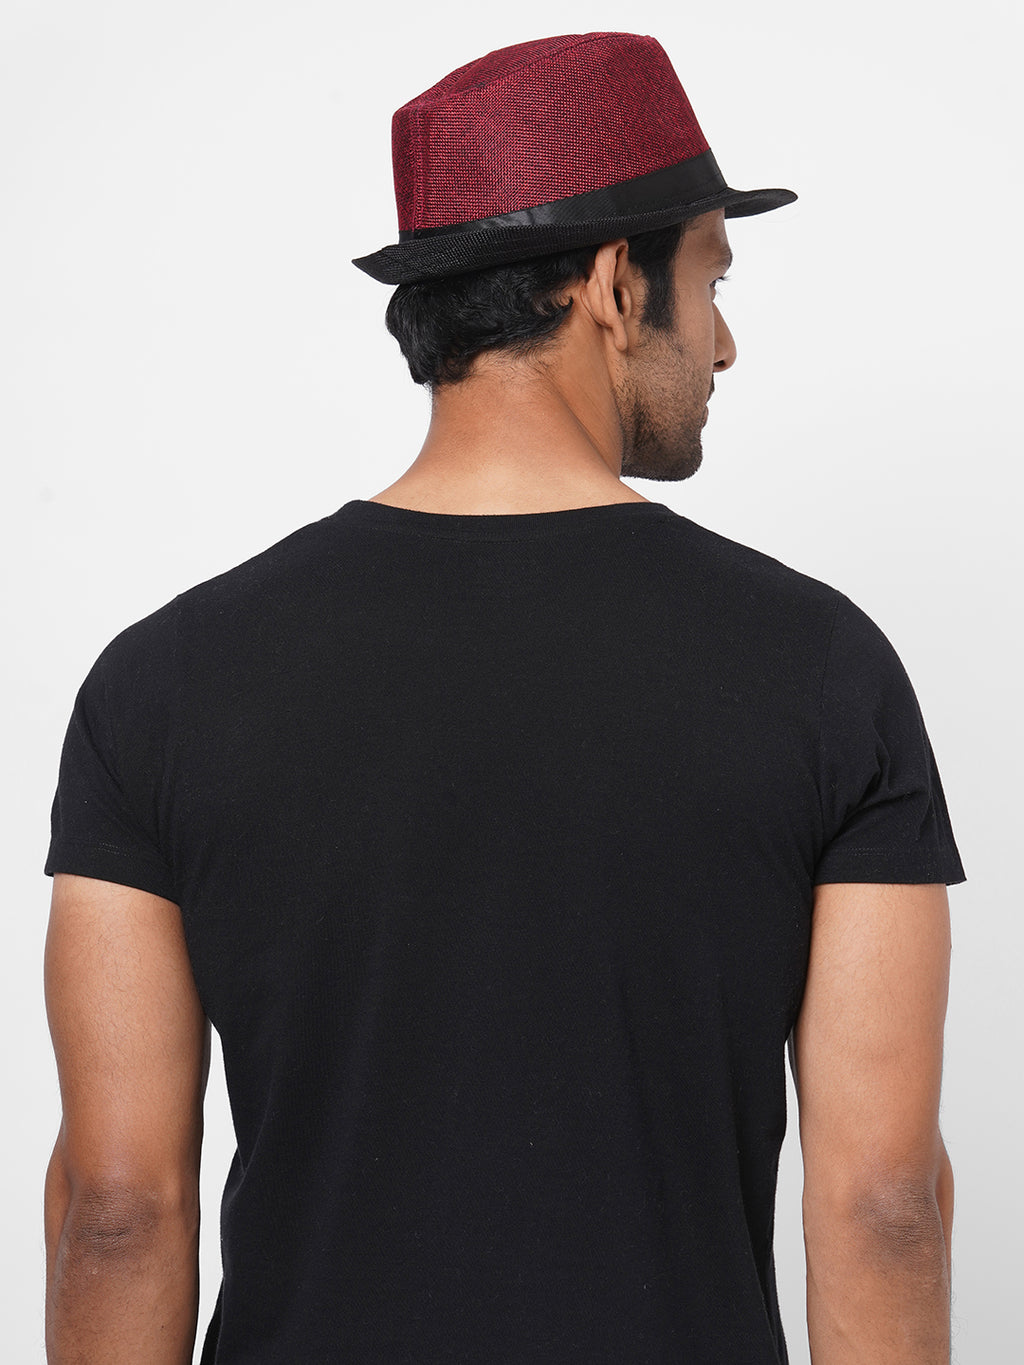 Stylish beach hats for men - Good mens beach hats- Comfortable beach hat for men – Online mens beach hats 